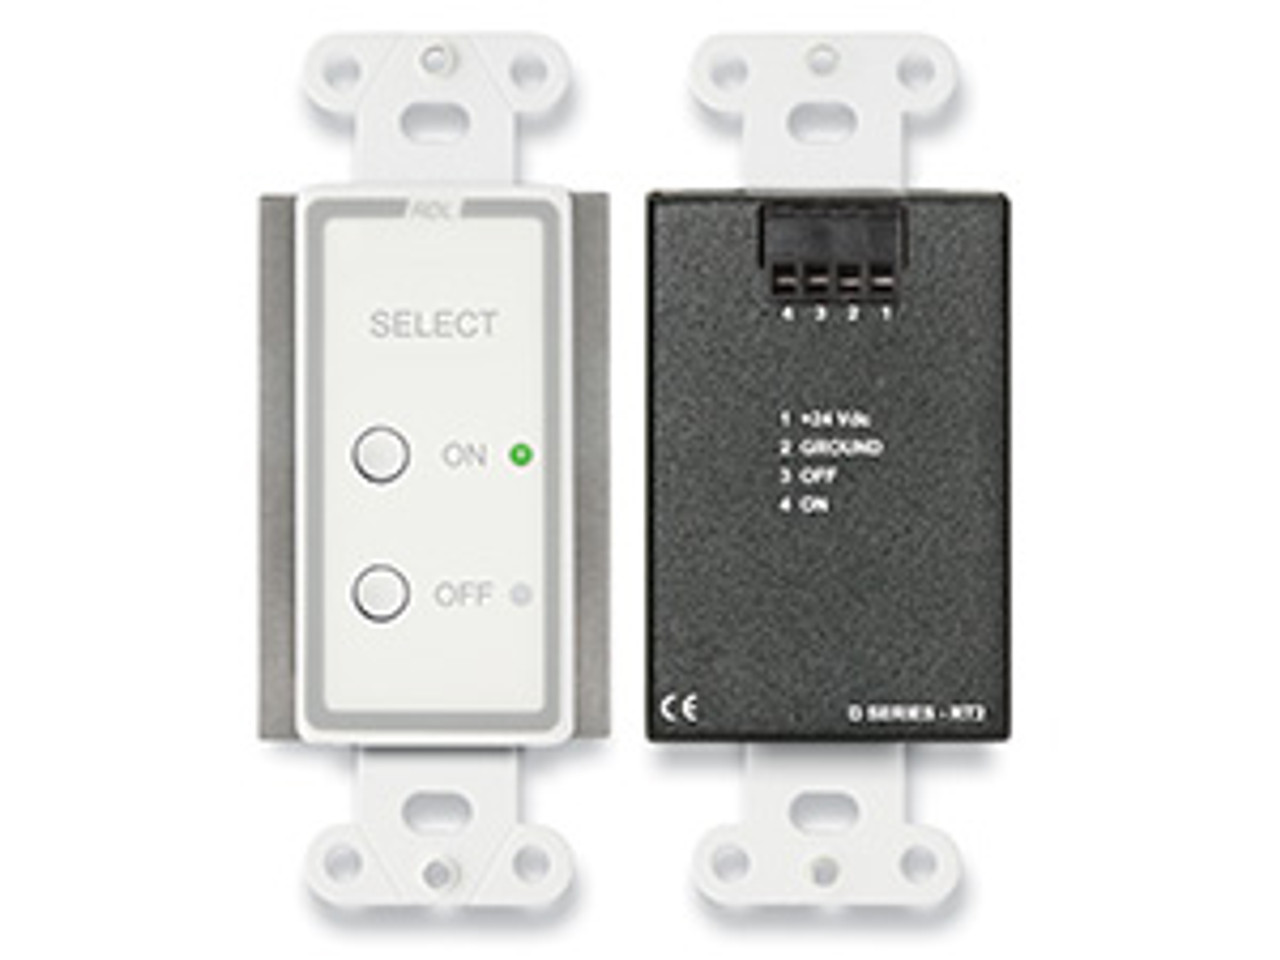 RDL D-RT2 Remote Control Selector (DRT2)